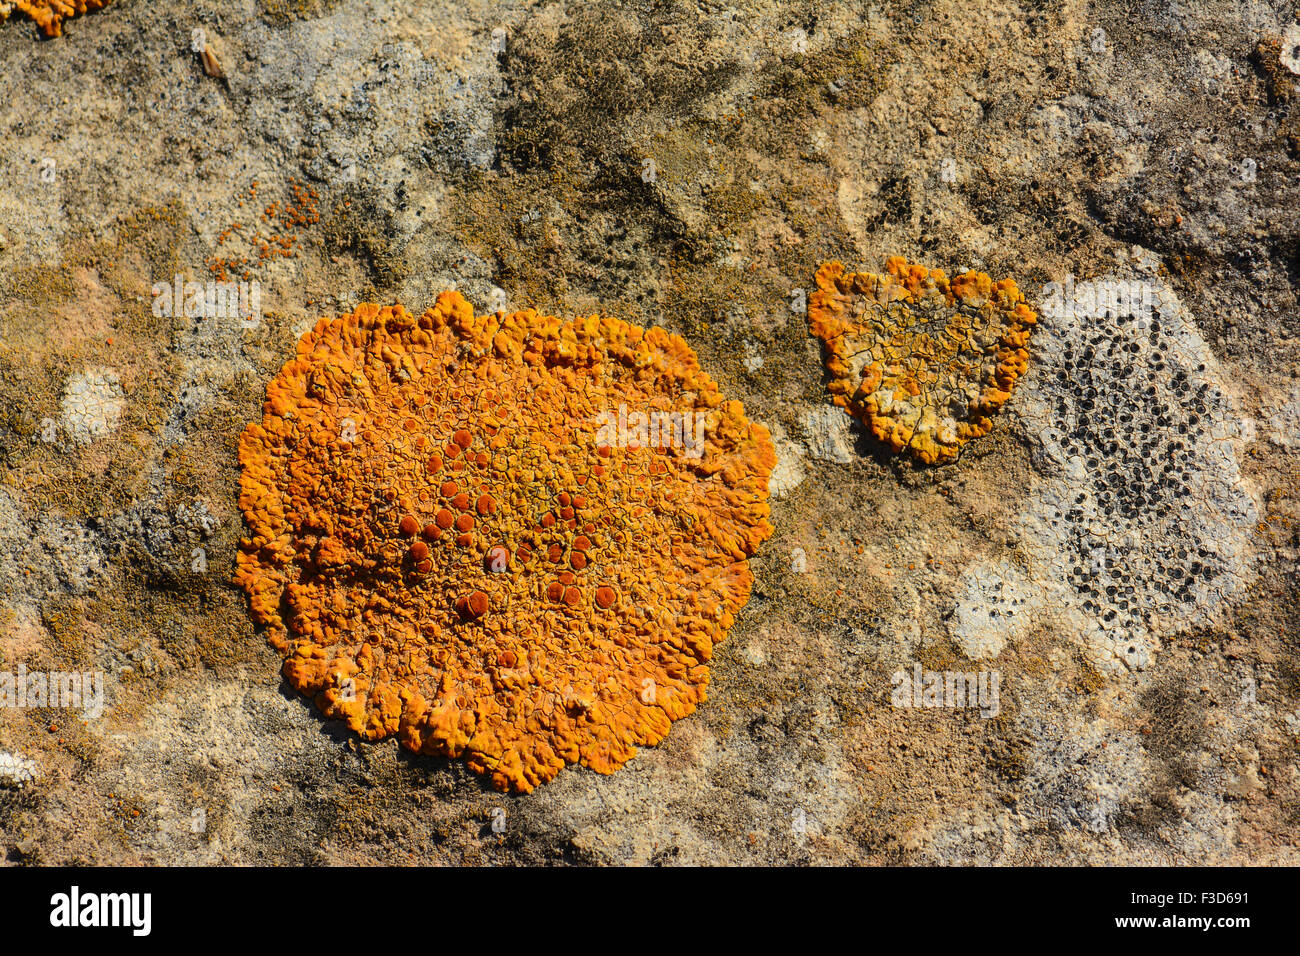 Lichen on a rock Stock Photo